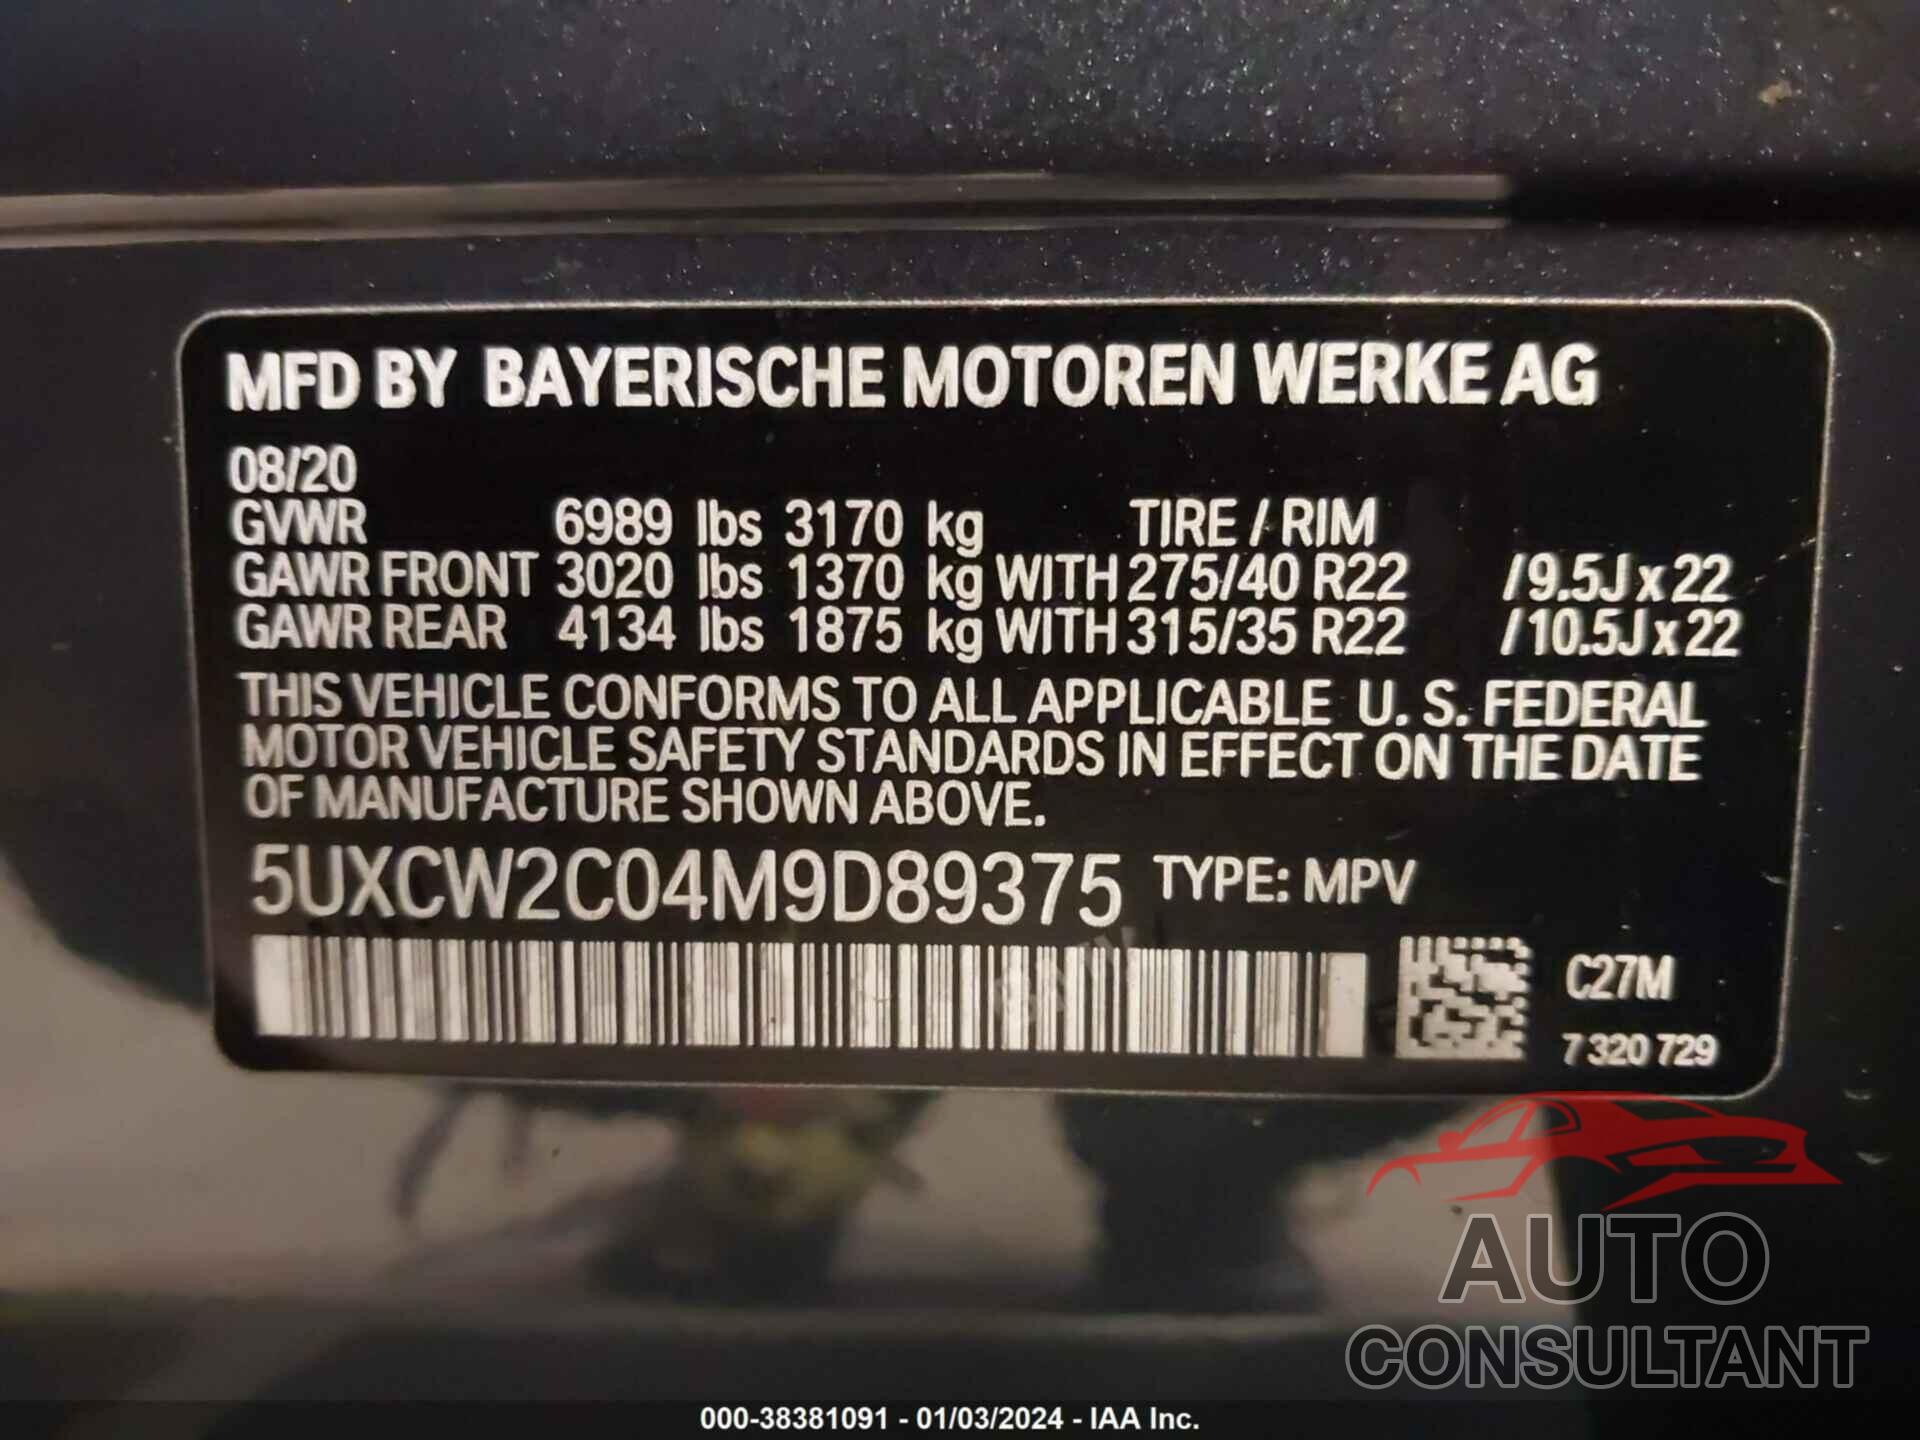 BMW X7 2021 - 5UXCW2C04M9D89375